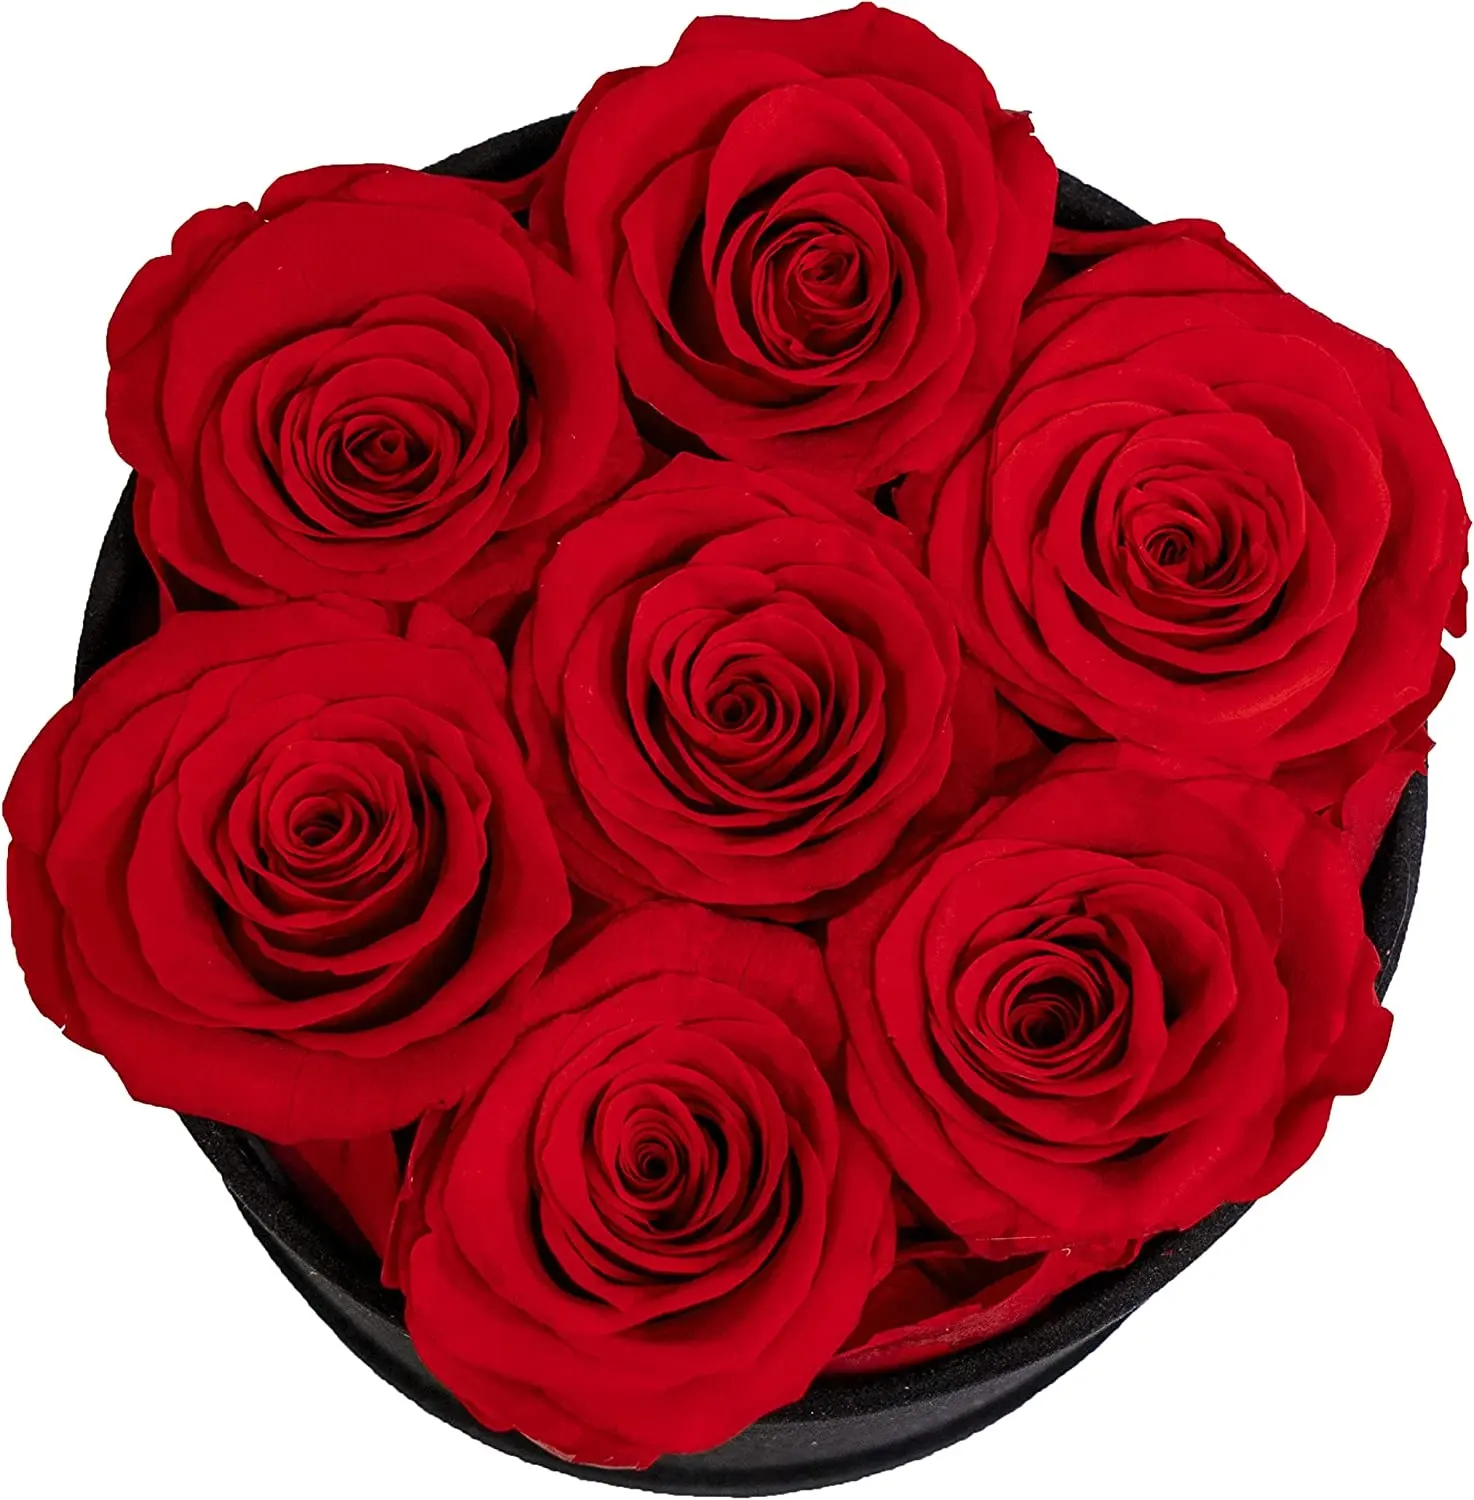 Ide produk 2023 hadiah Hari Valentine abadi abadi abadi abadi abadi abadi stabil bunga mawar yang diawetkan kotak